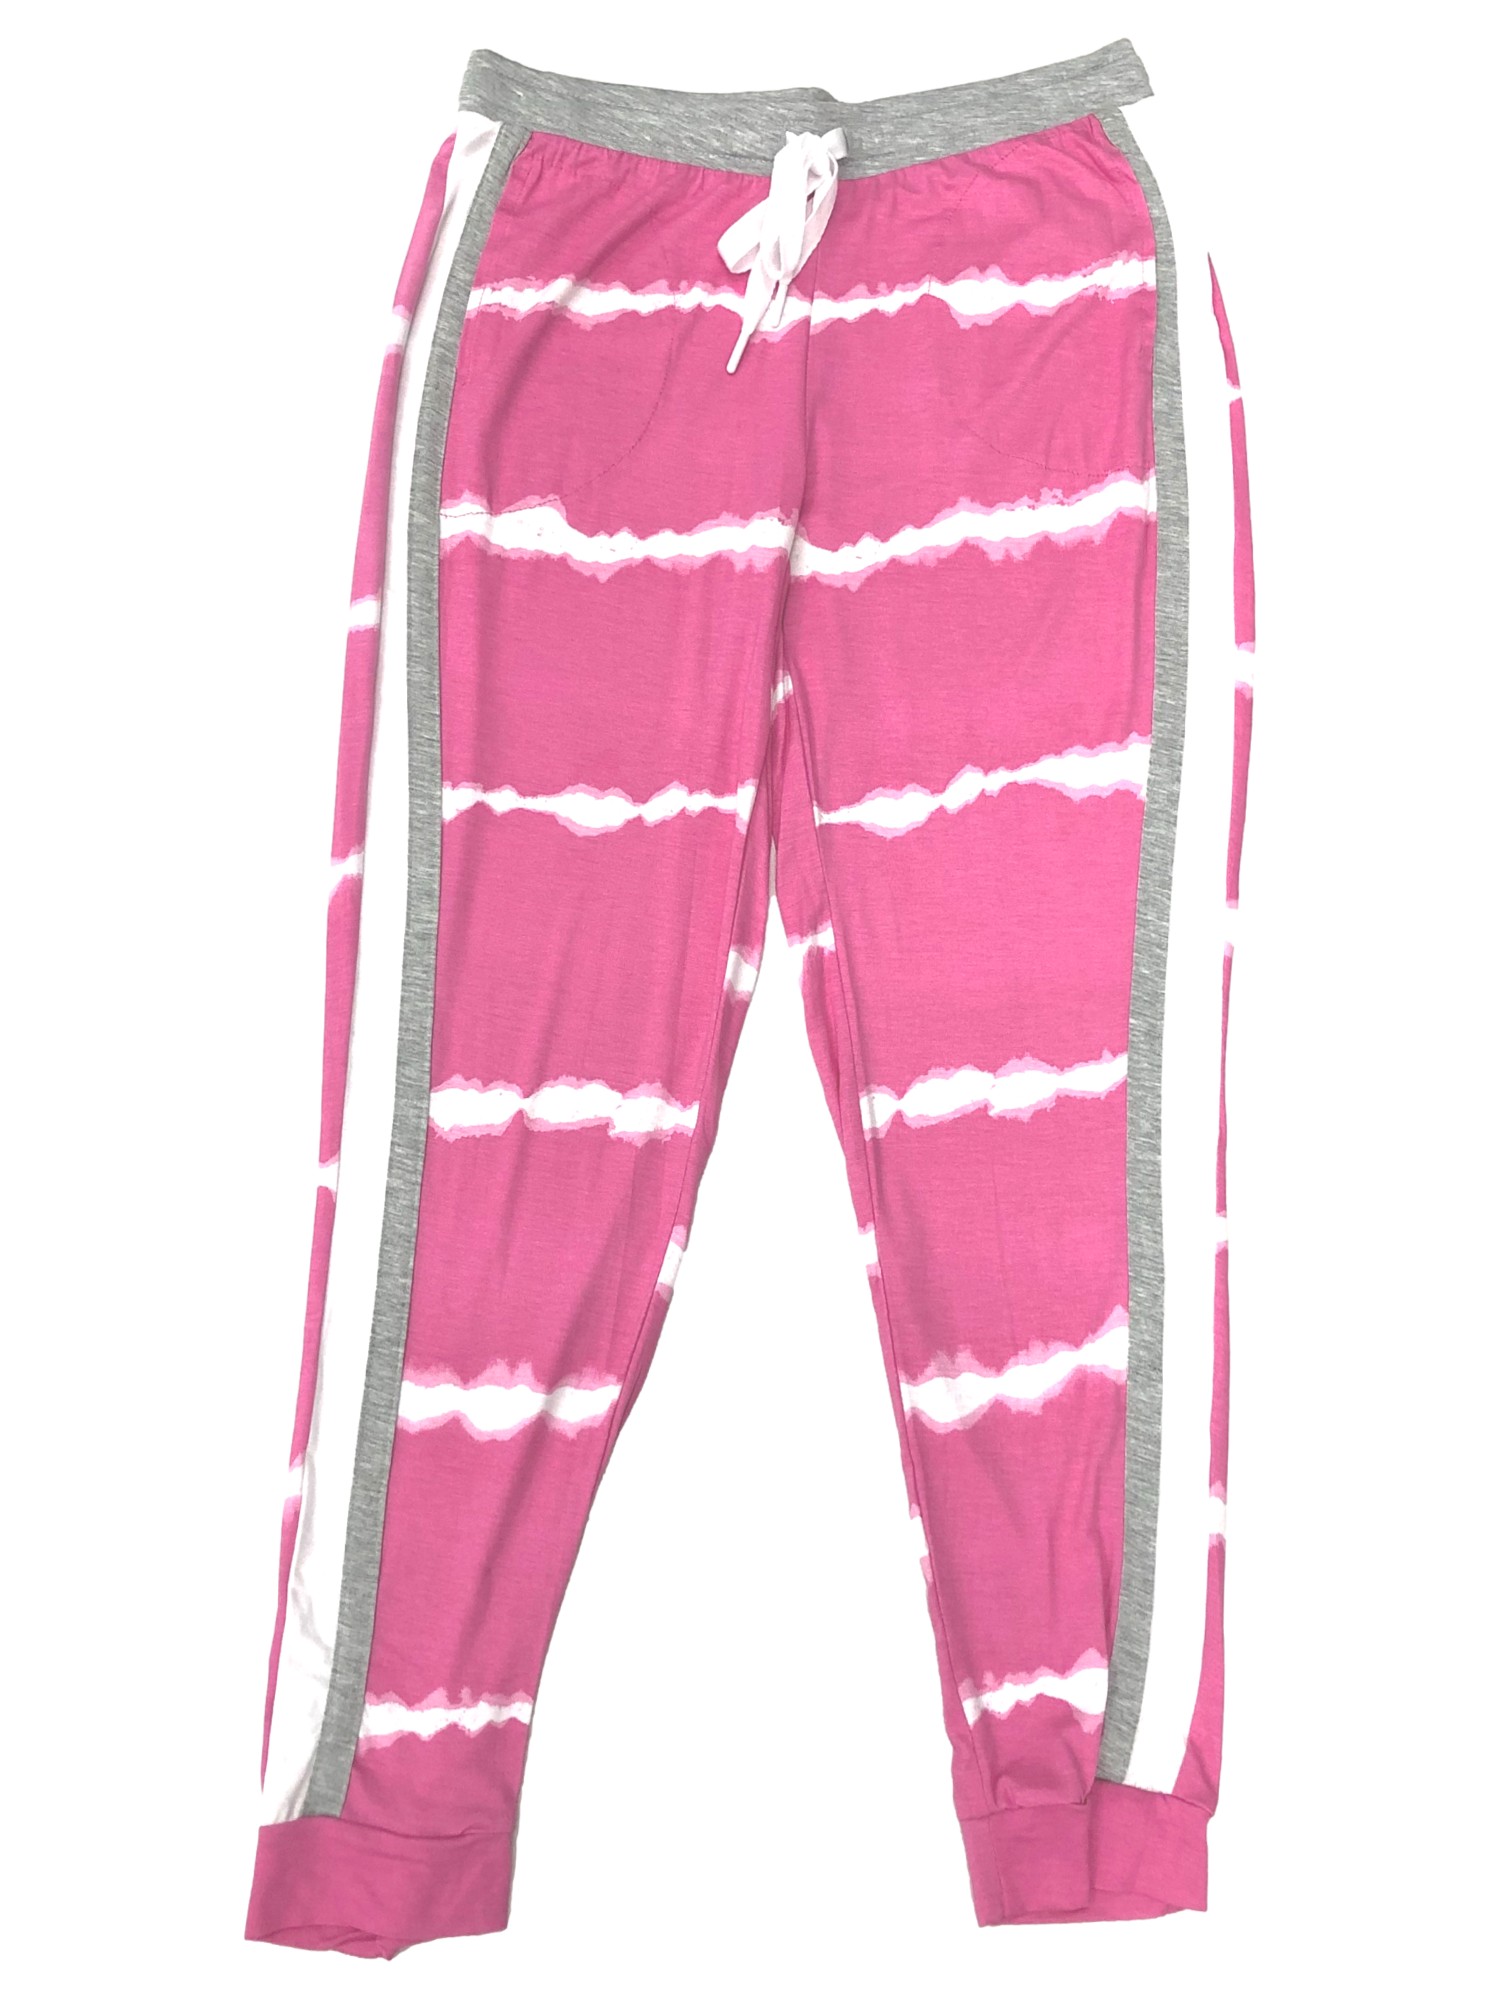 Generic Womens Pink & White Stripe Joggers Sleep & Lounge Pants Pajama Bottoms